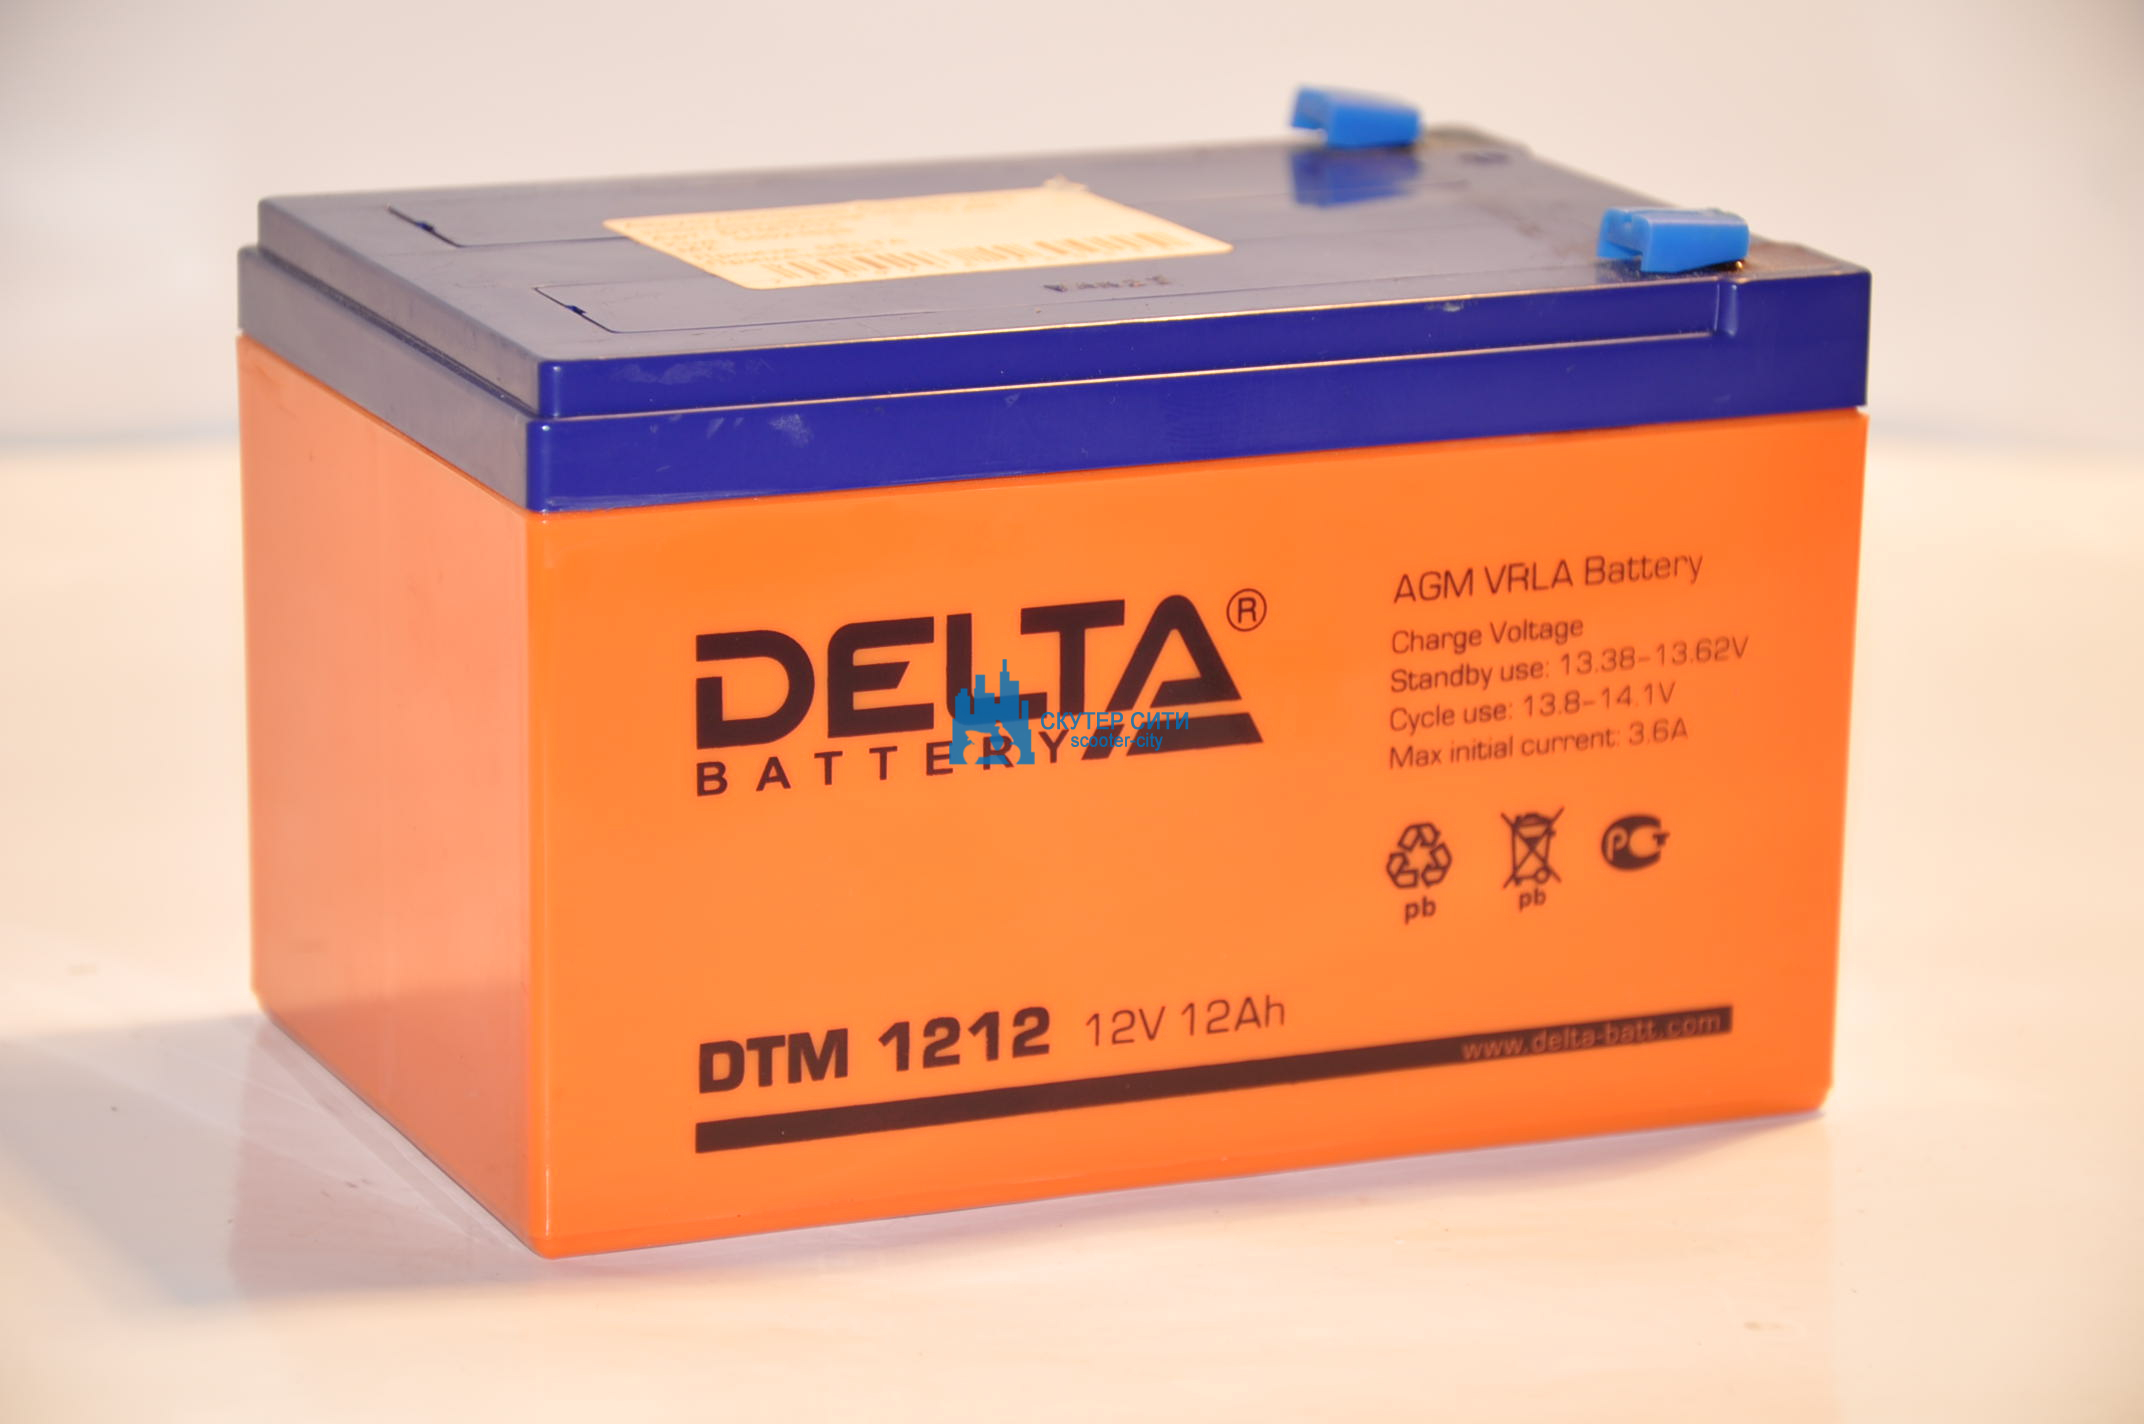 Аккумулятор для электромобиля 12v. Аккумулятор Дельта 12v 12ah. Аккумулятор Delta DTM 1212 12v 12ah. Аккумулятор Delta dtm1212 12v 12ah (151*98*101mm). Аккум.Delta DTM 1212 12v 12ah 23603.